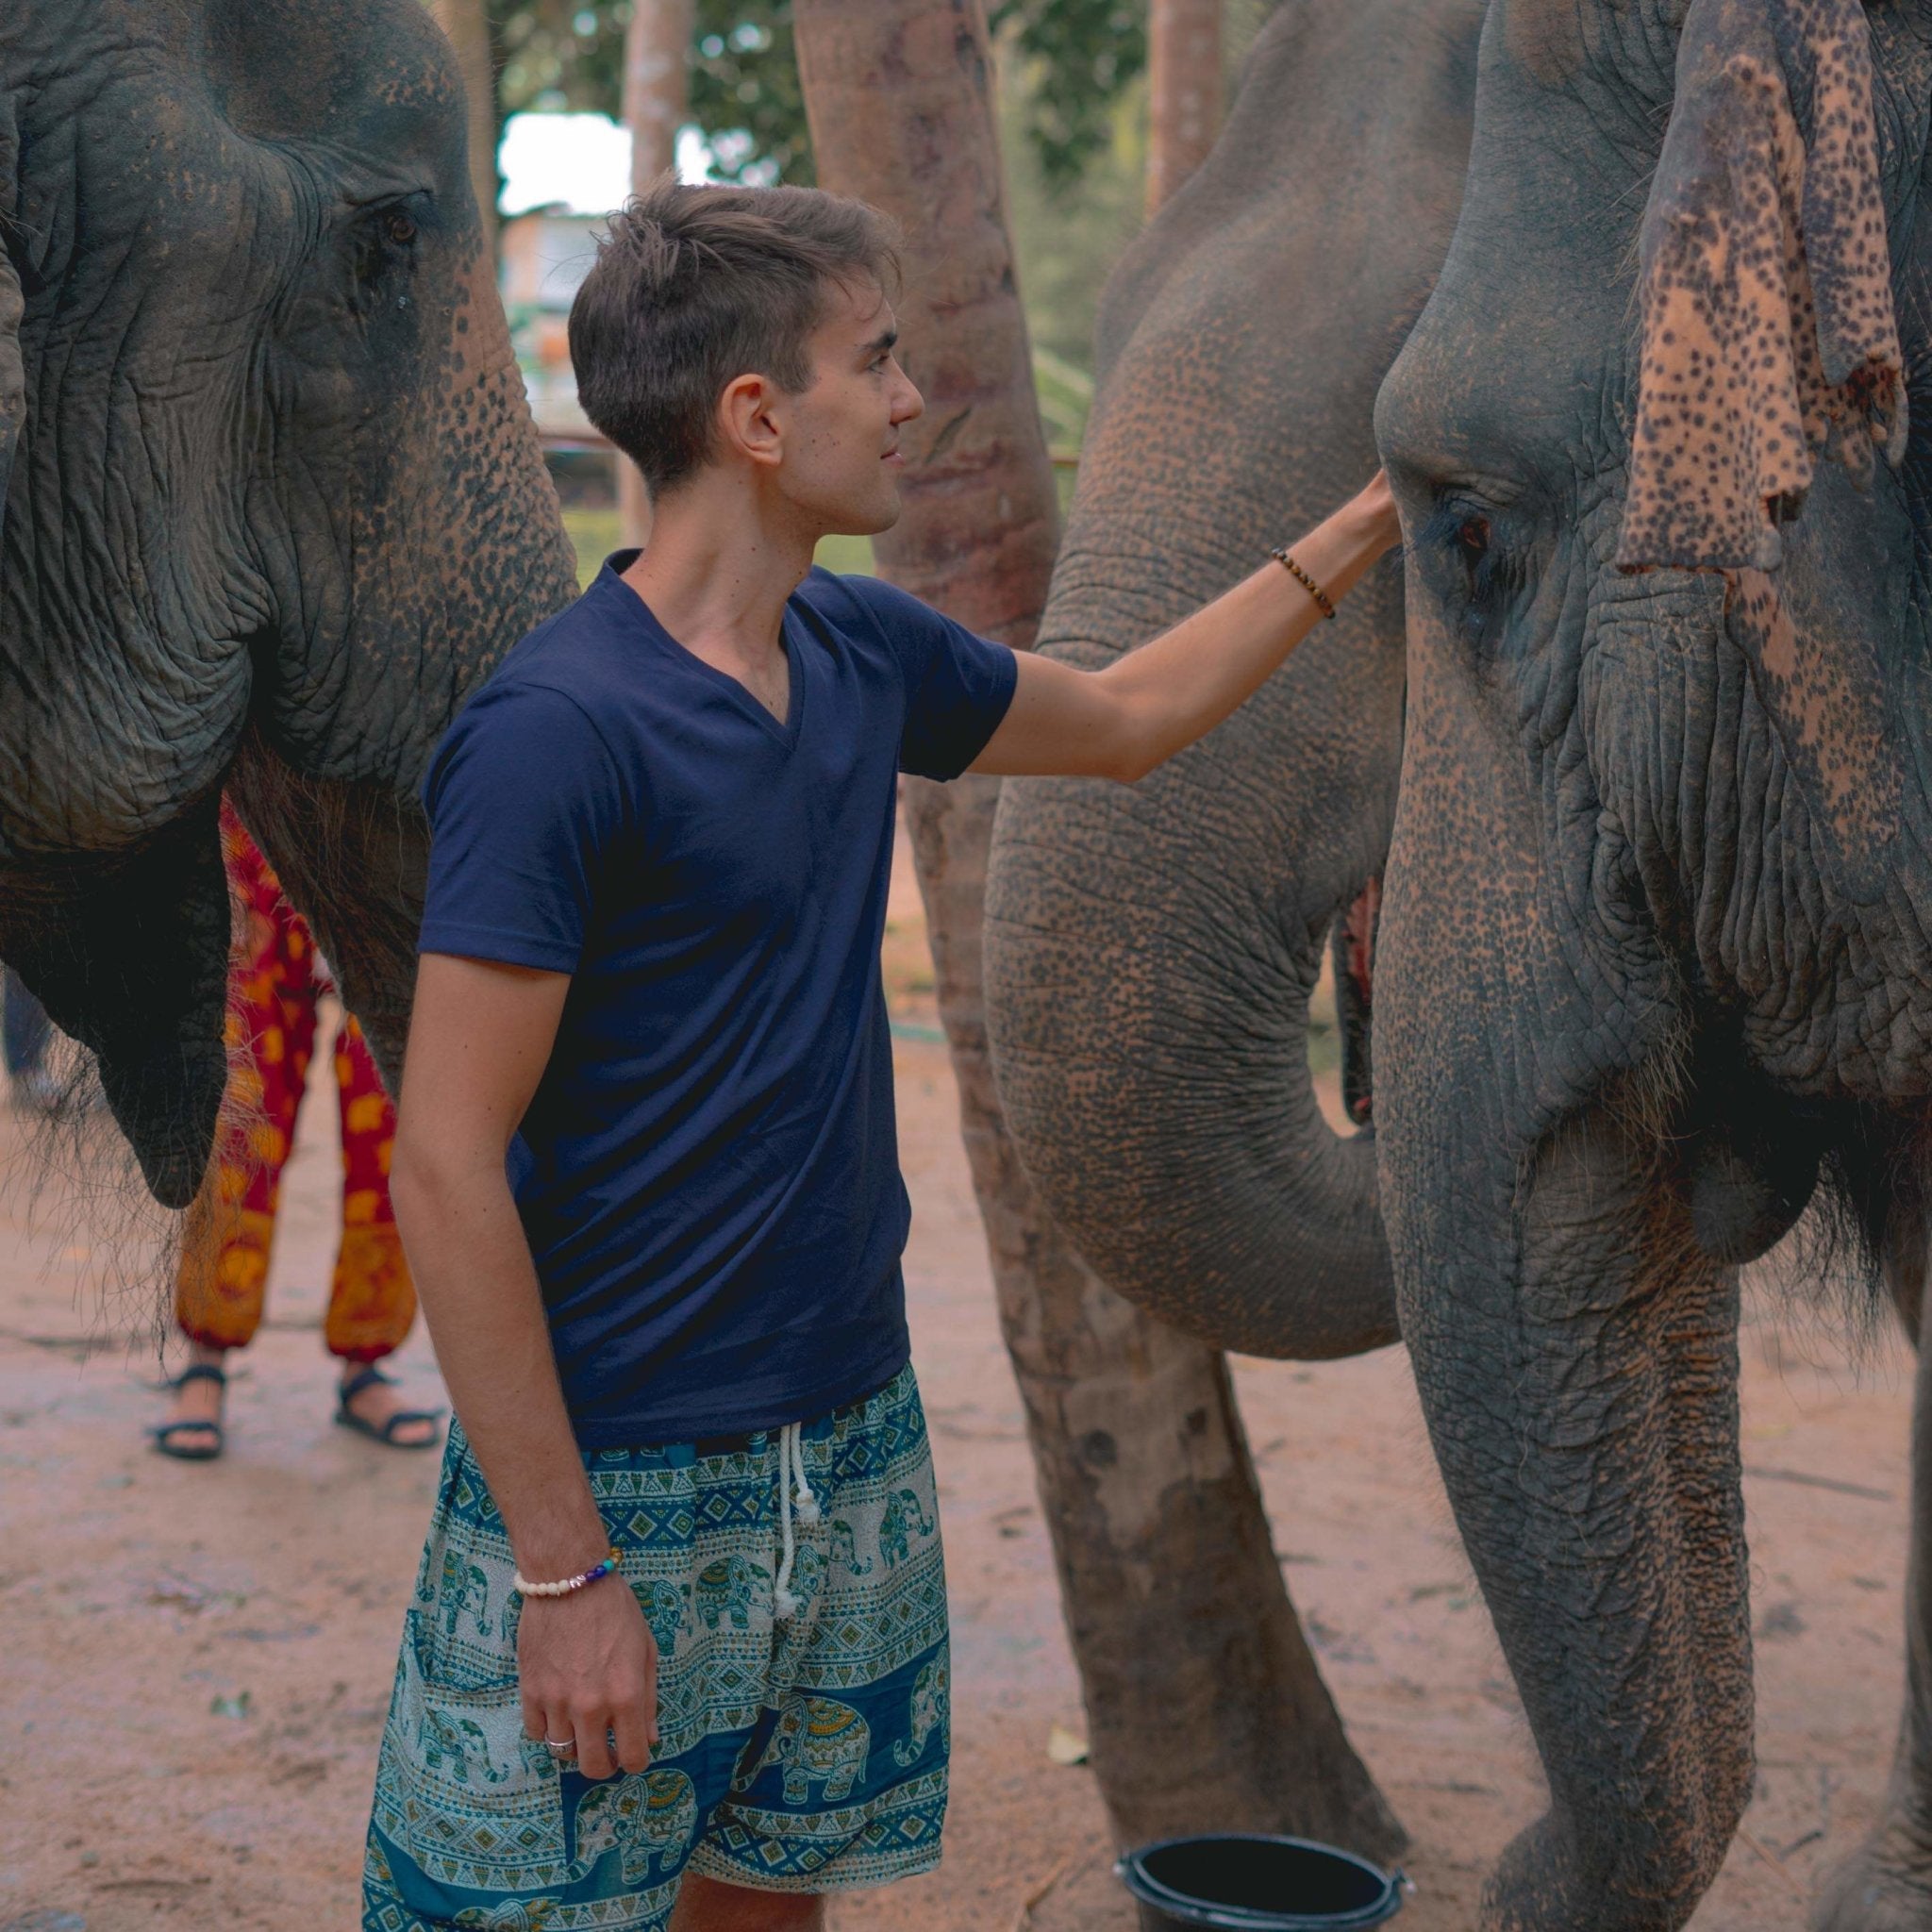 ANGKOR MEN'S SHORTS Elepanta Men's Shorts - Buy Today Elephant Pants Jewelry And Bohemian Clothes Handmade In Thailand Help To Save The Elephants FairTrade And Vegan